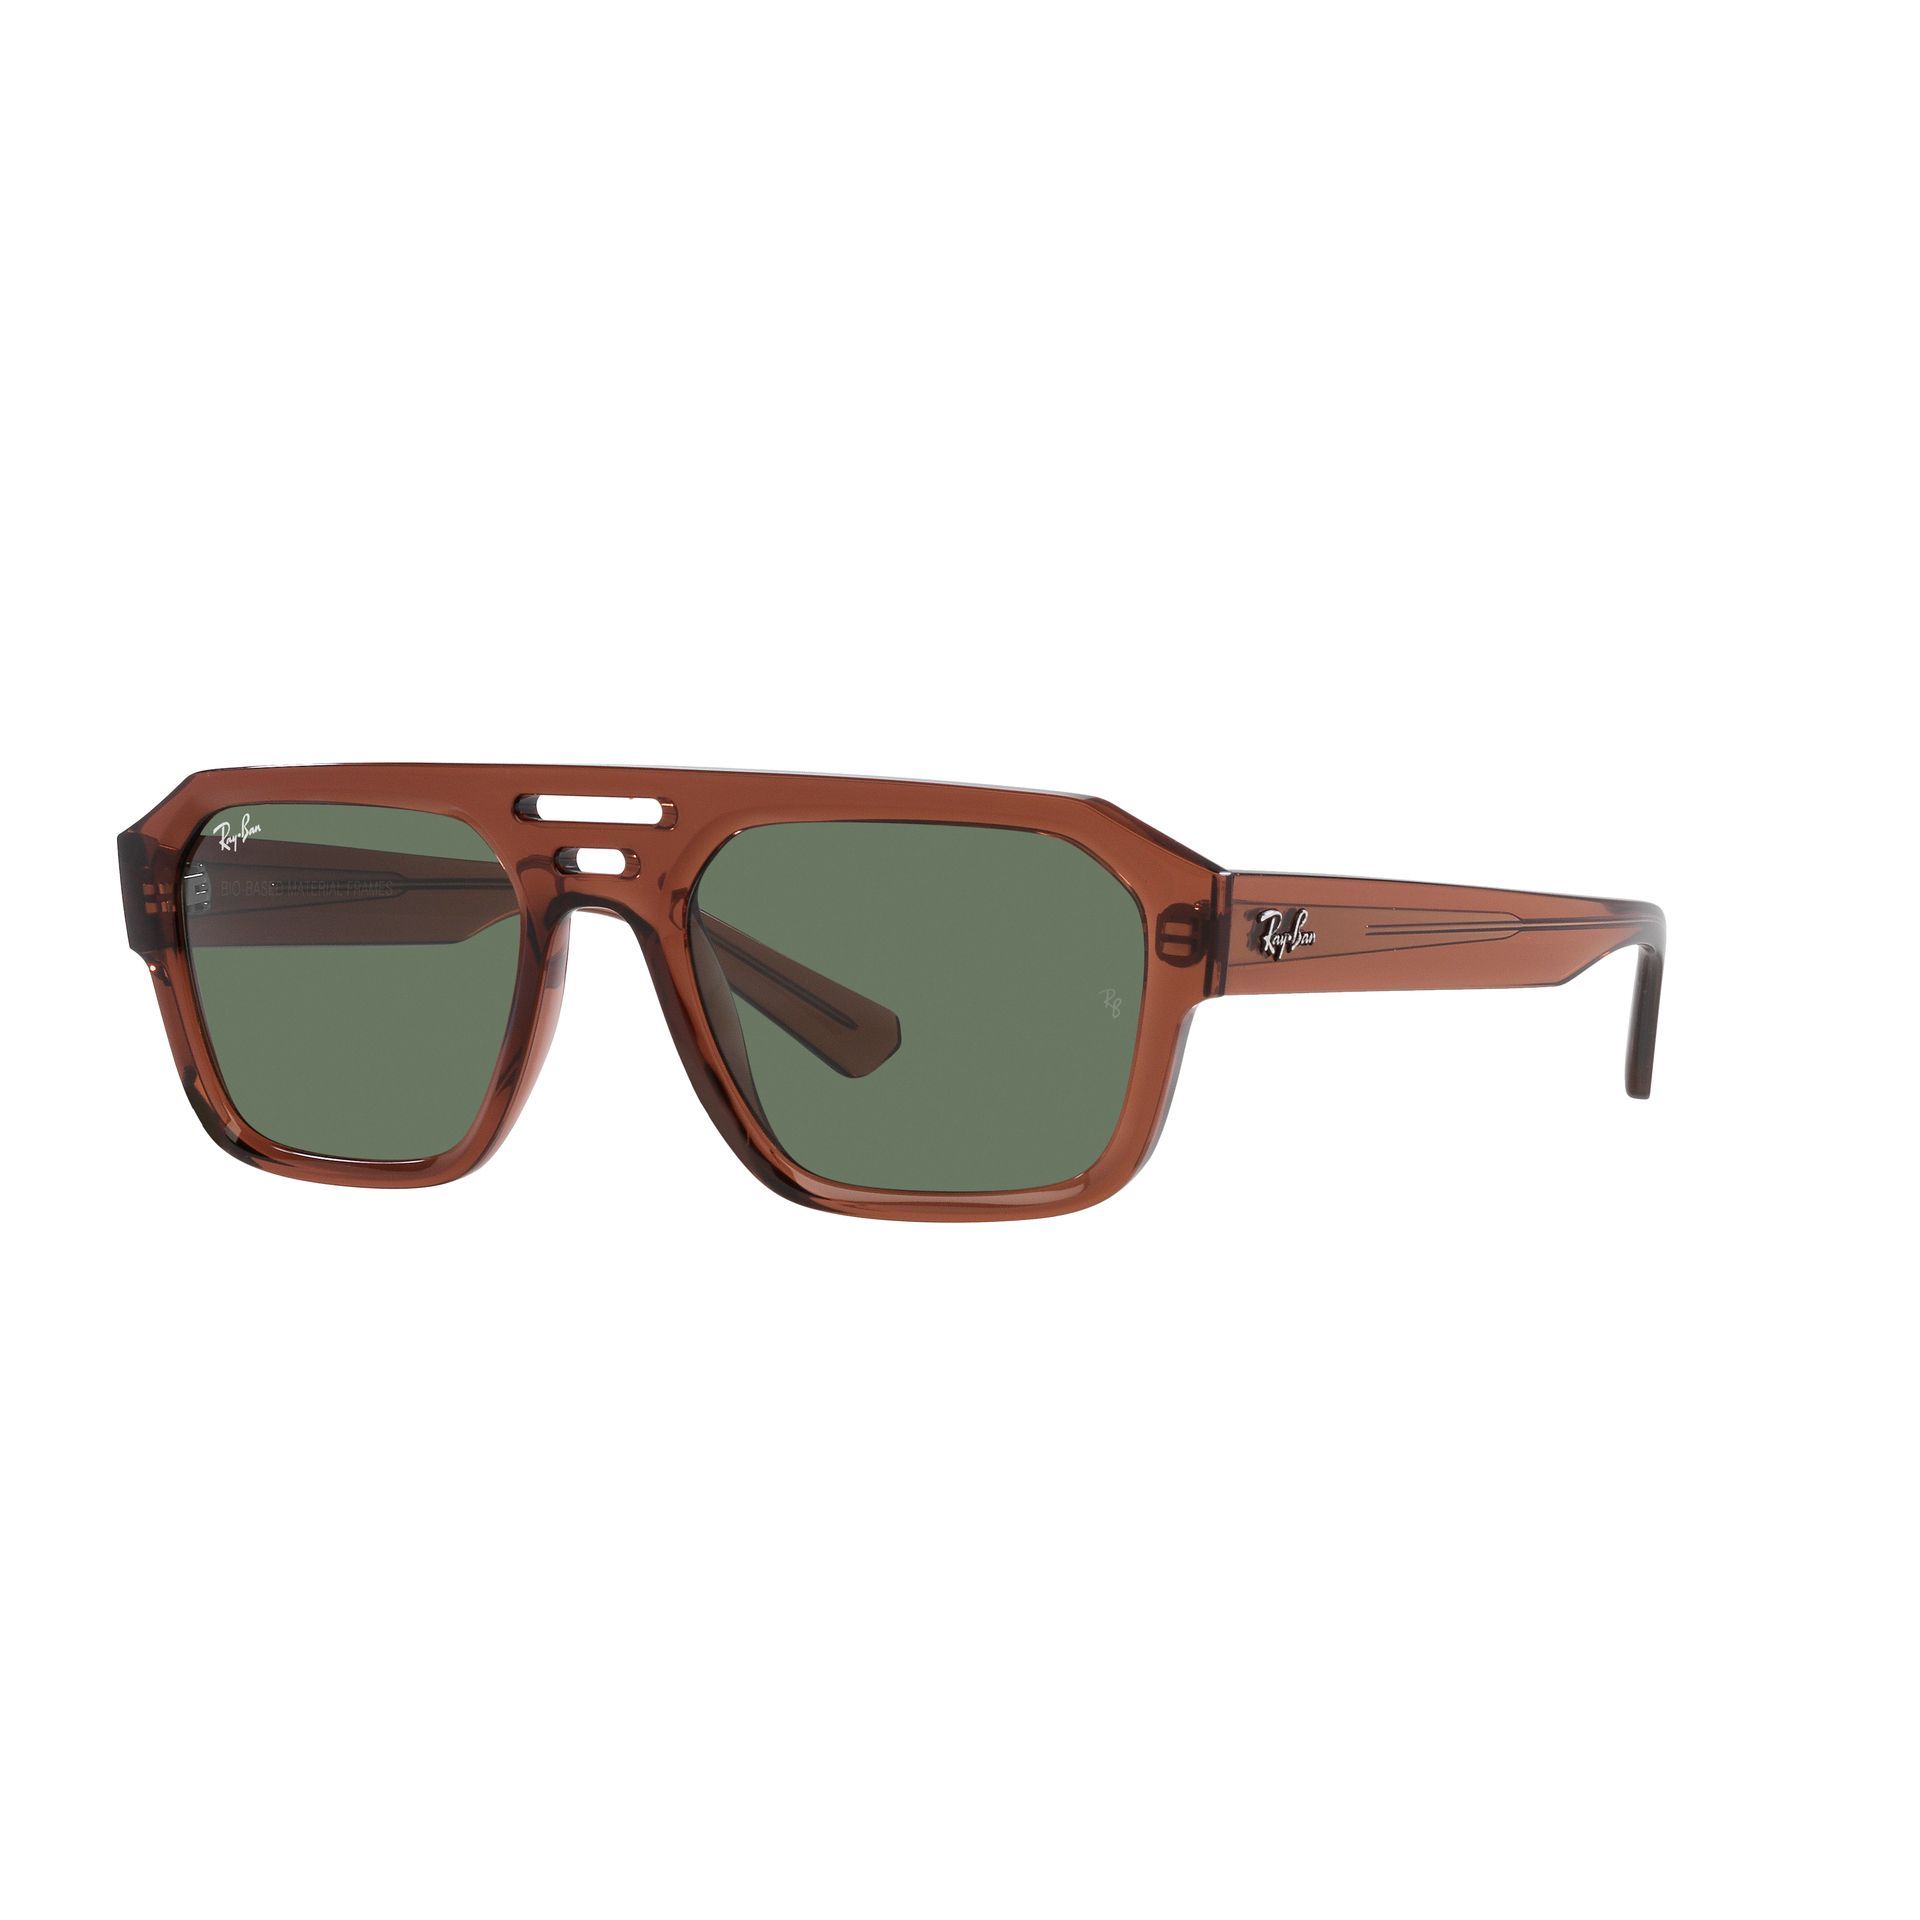 Corrigan Bio-based  Sunglasses RB4397 667882 - size 54